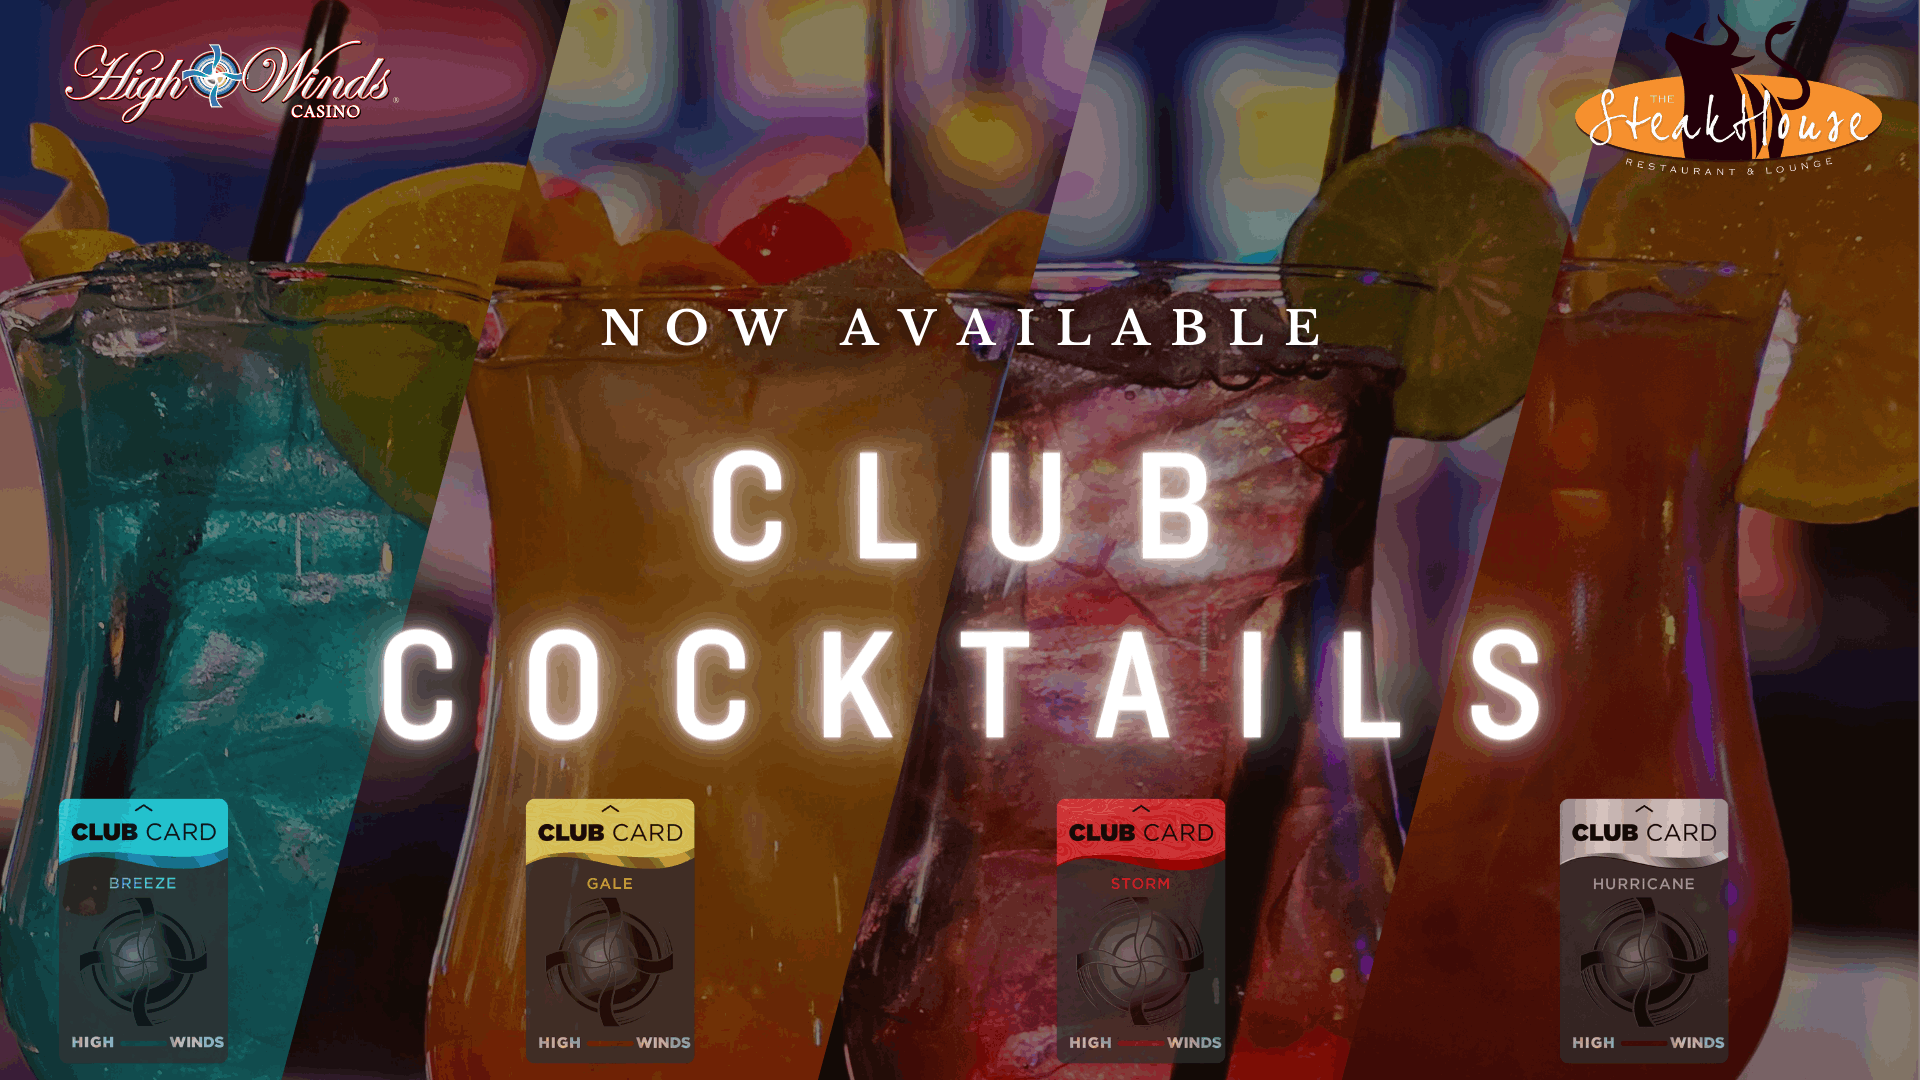 Club Cocktails